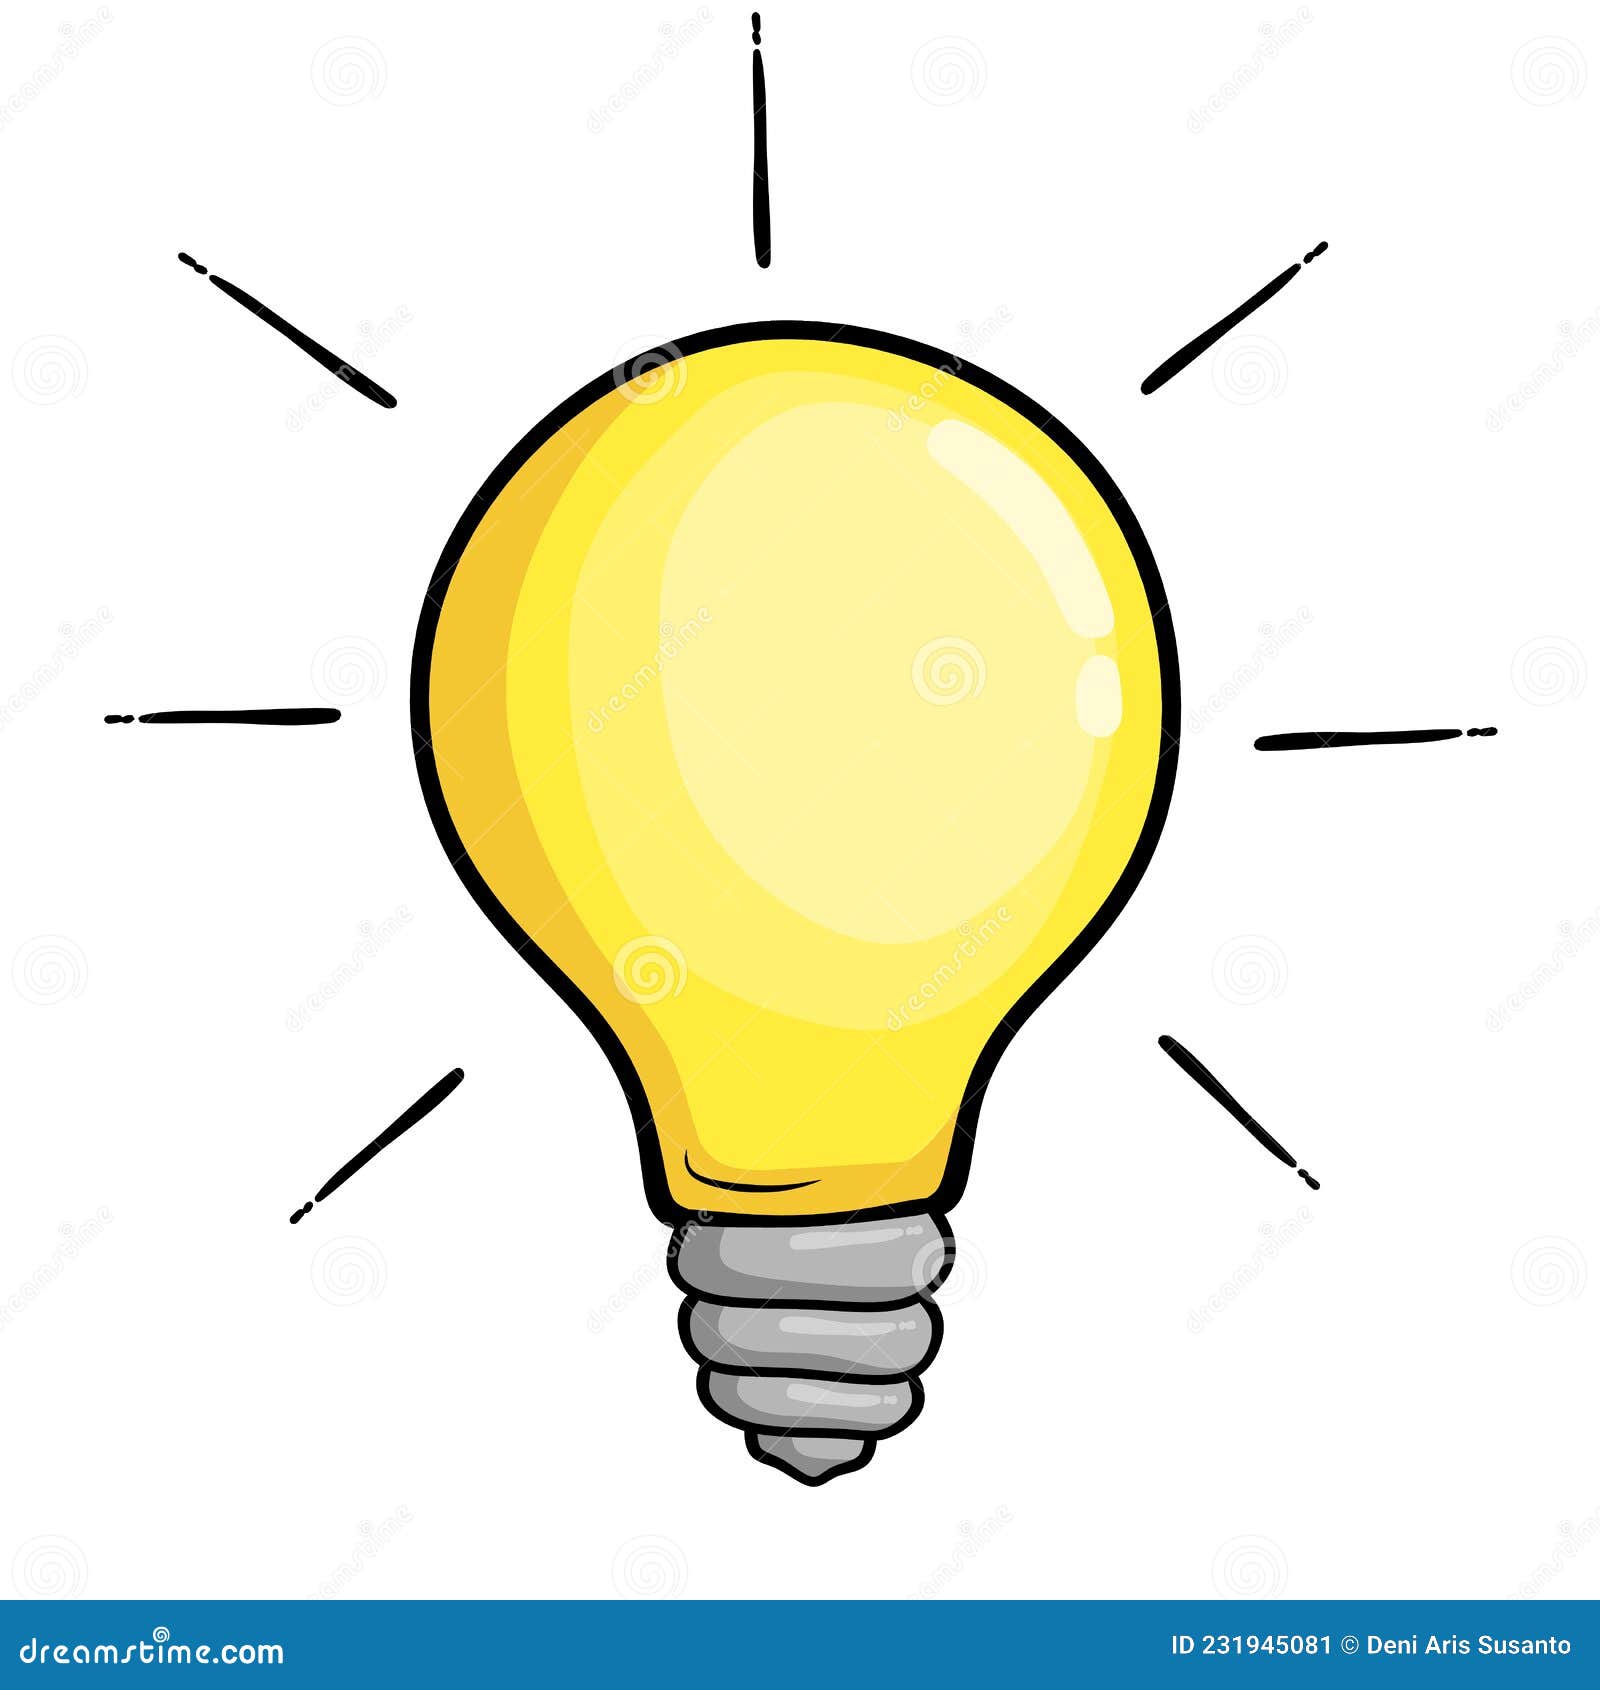 A Cartoon Light Bulb with an Idea. Stock Vector - Illustration of smiley,  concept: 231945081